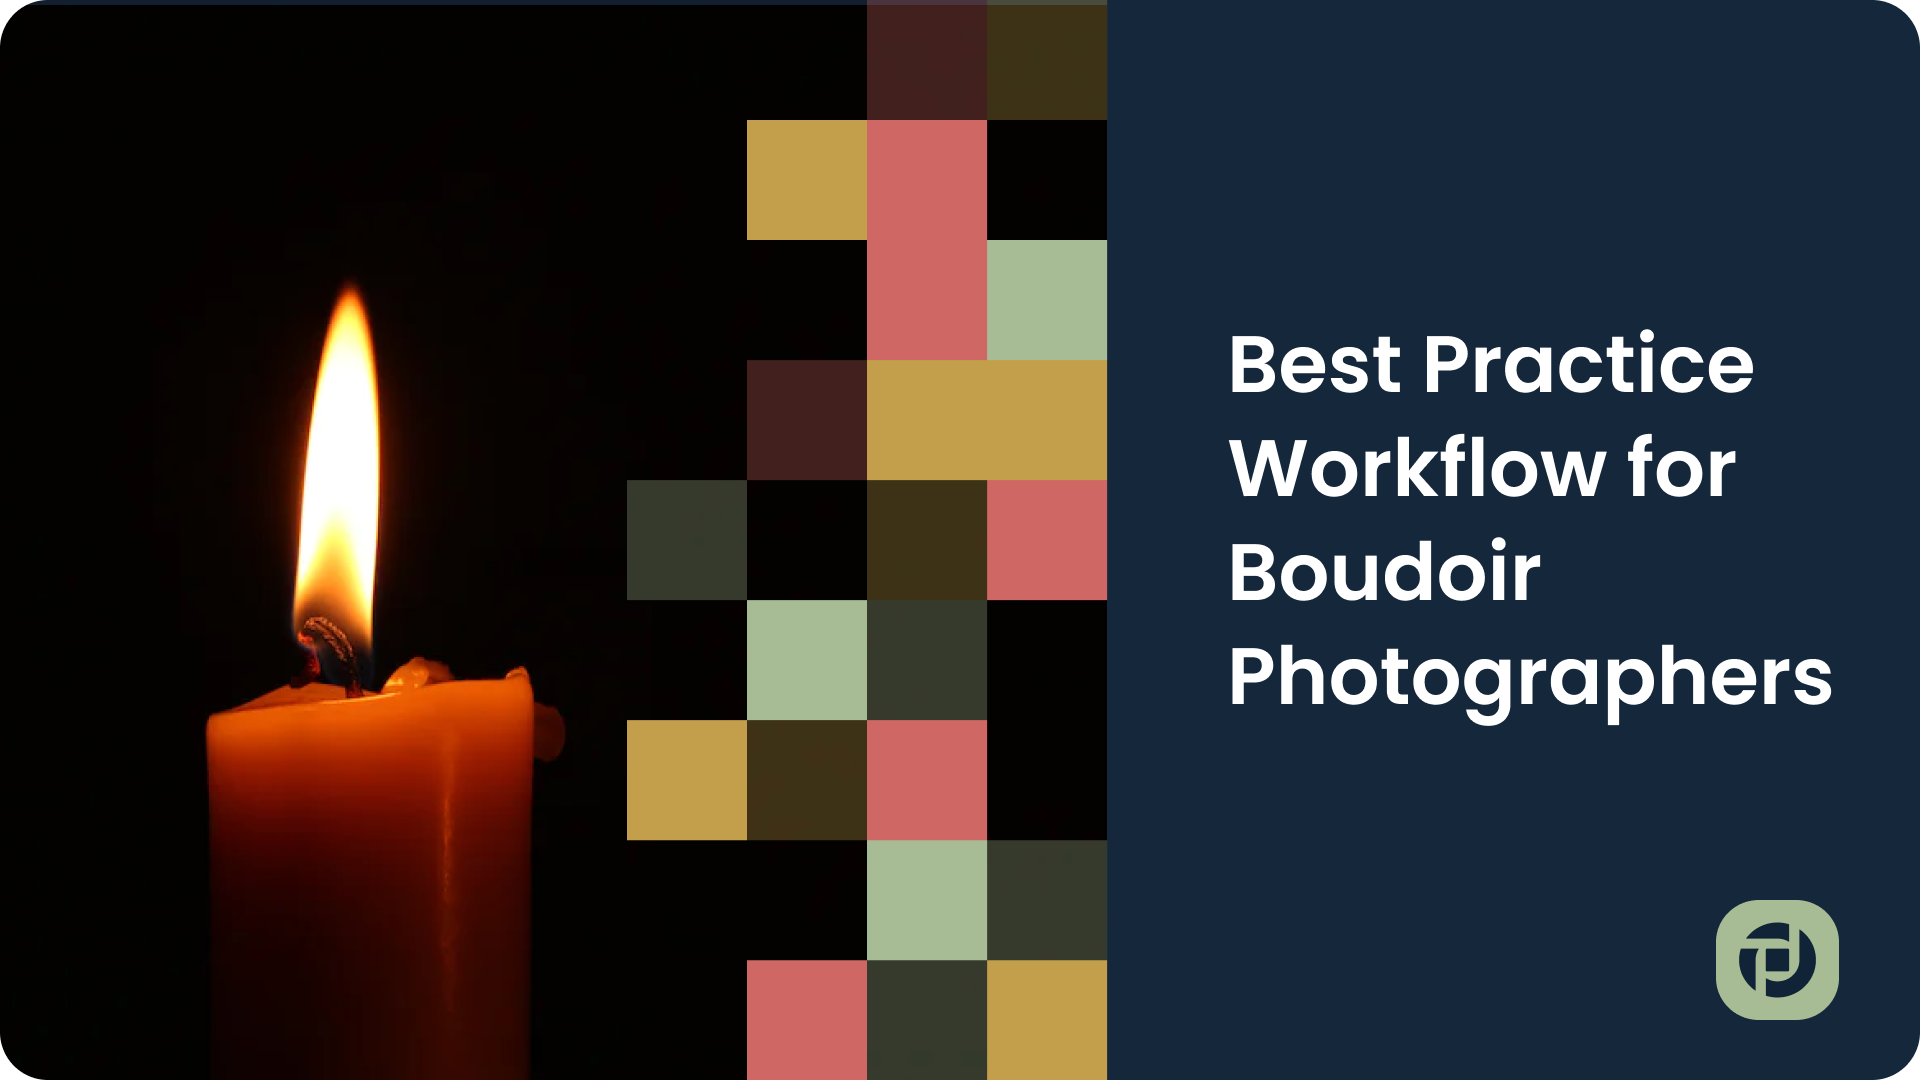 Best Practice Workflow for Boudoir Photographers